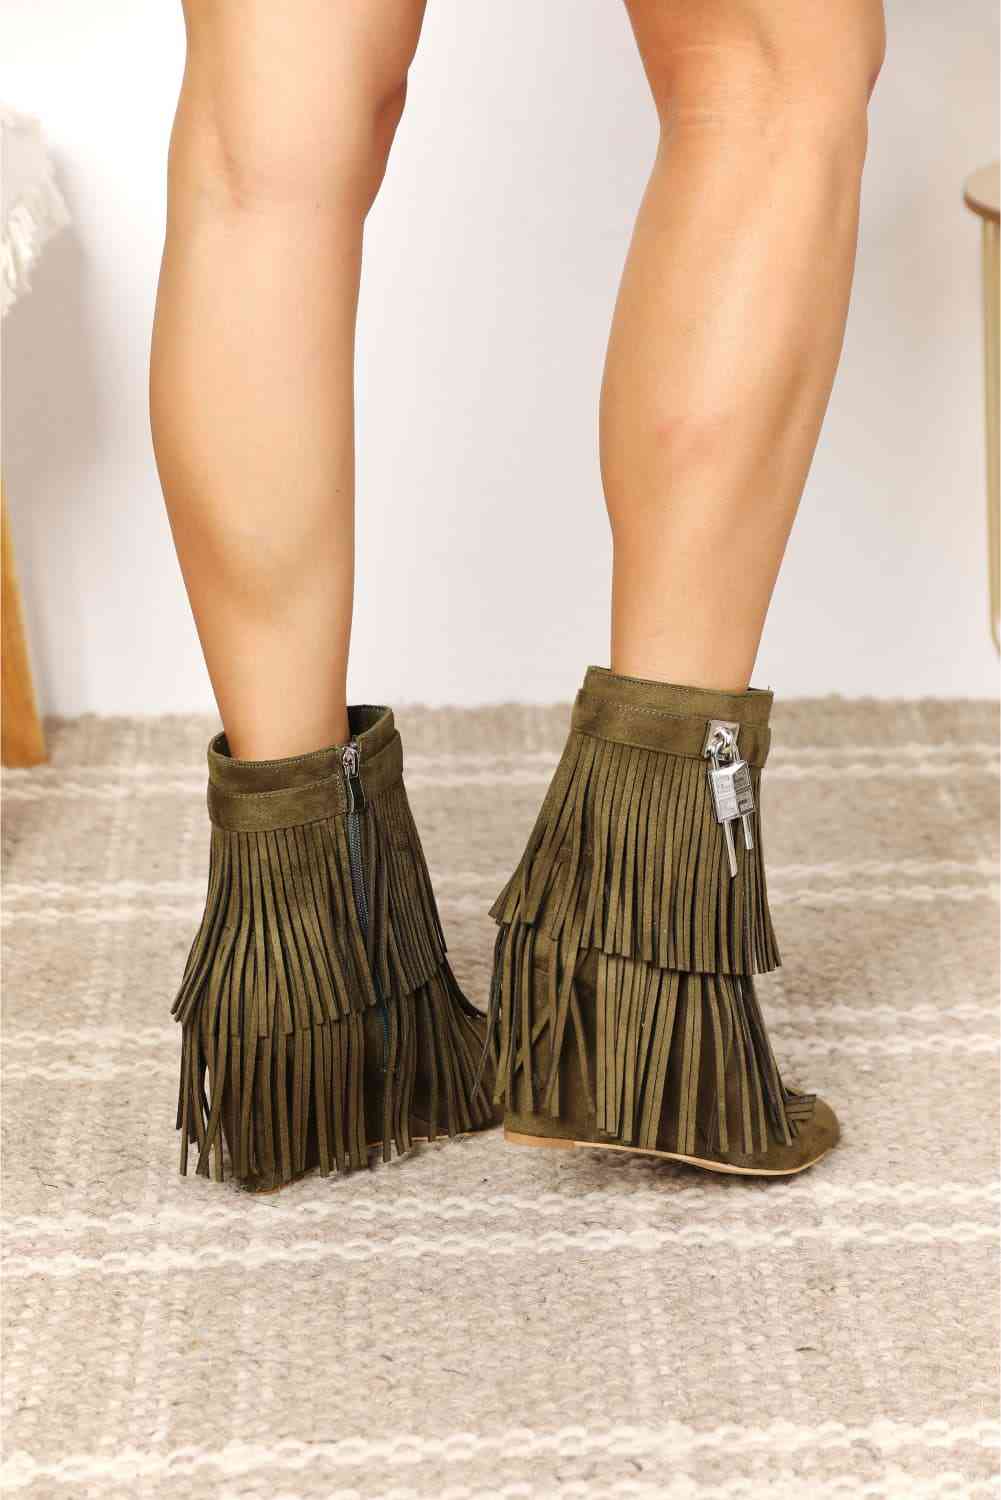 Legend Women’s Tassel Wedge Heel Ankle Booties - Women’s Clothing & Accessories - Shoes - 5 - 2024